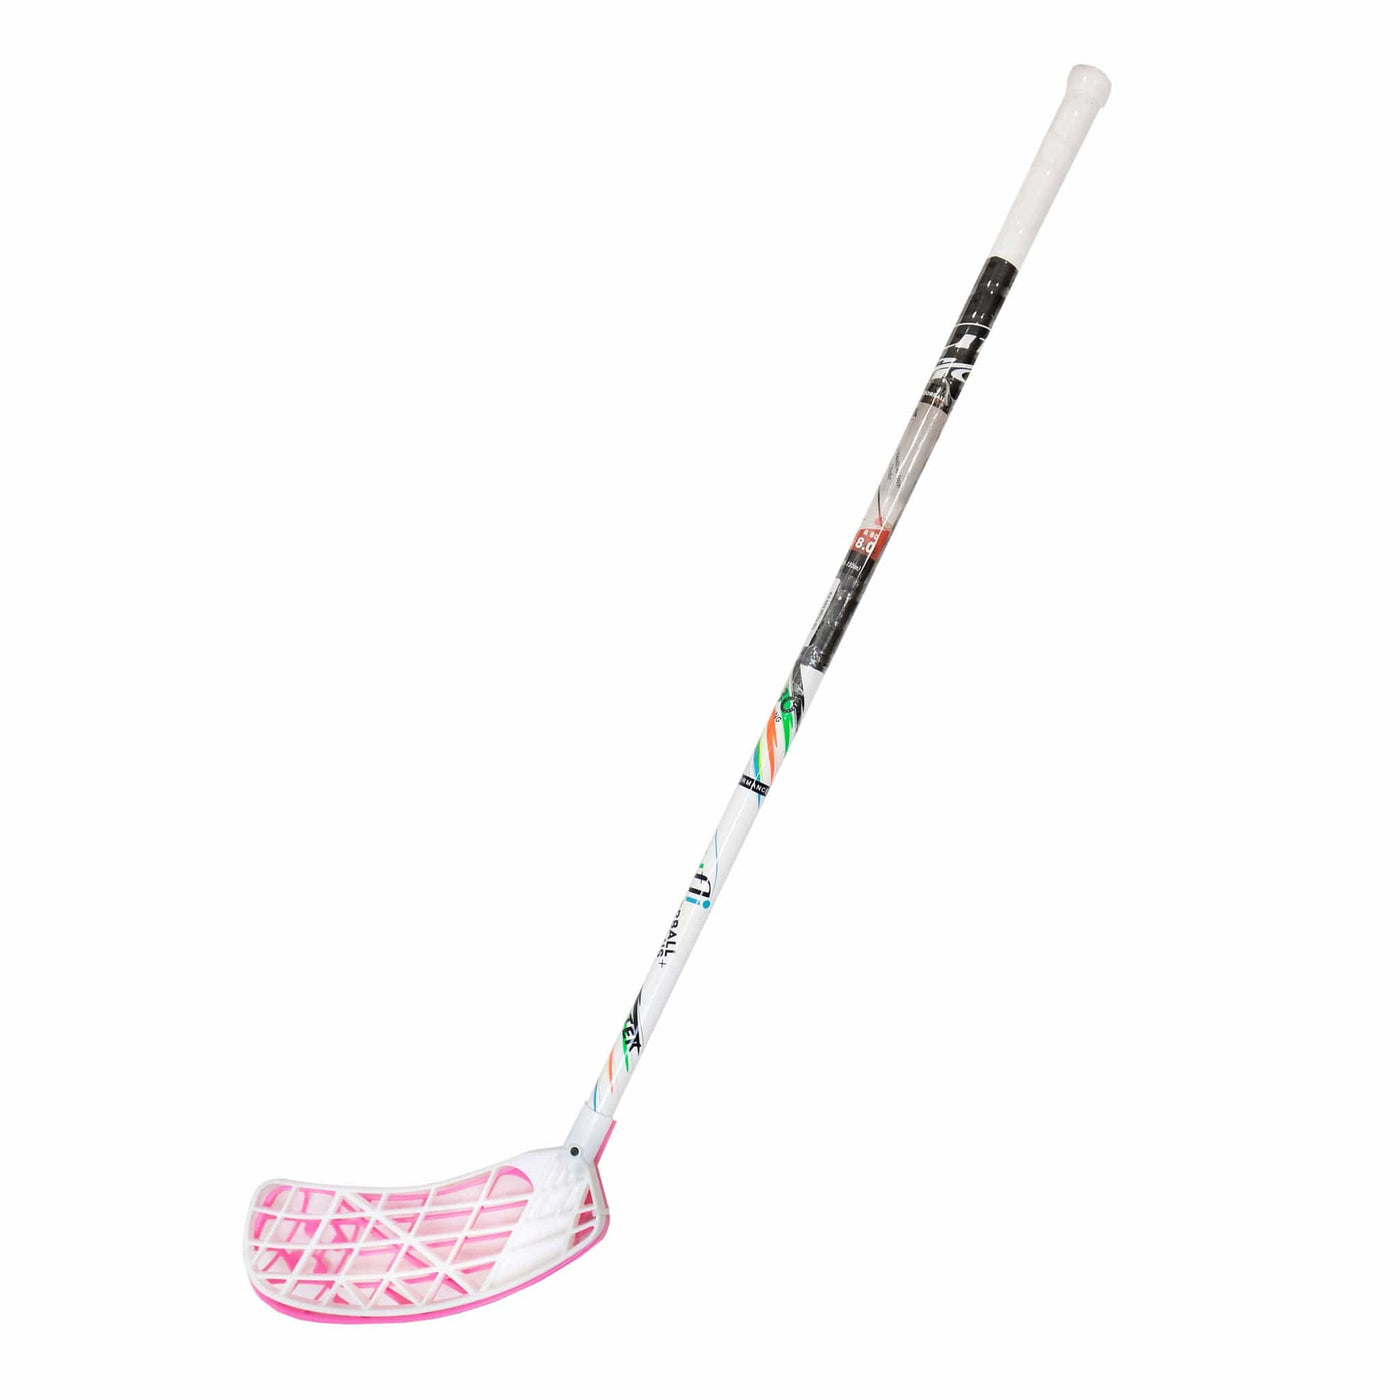 Accufli Airtek A80 Junior Floorball Stick - The Hockey Shop Source For Sports